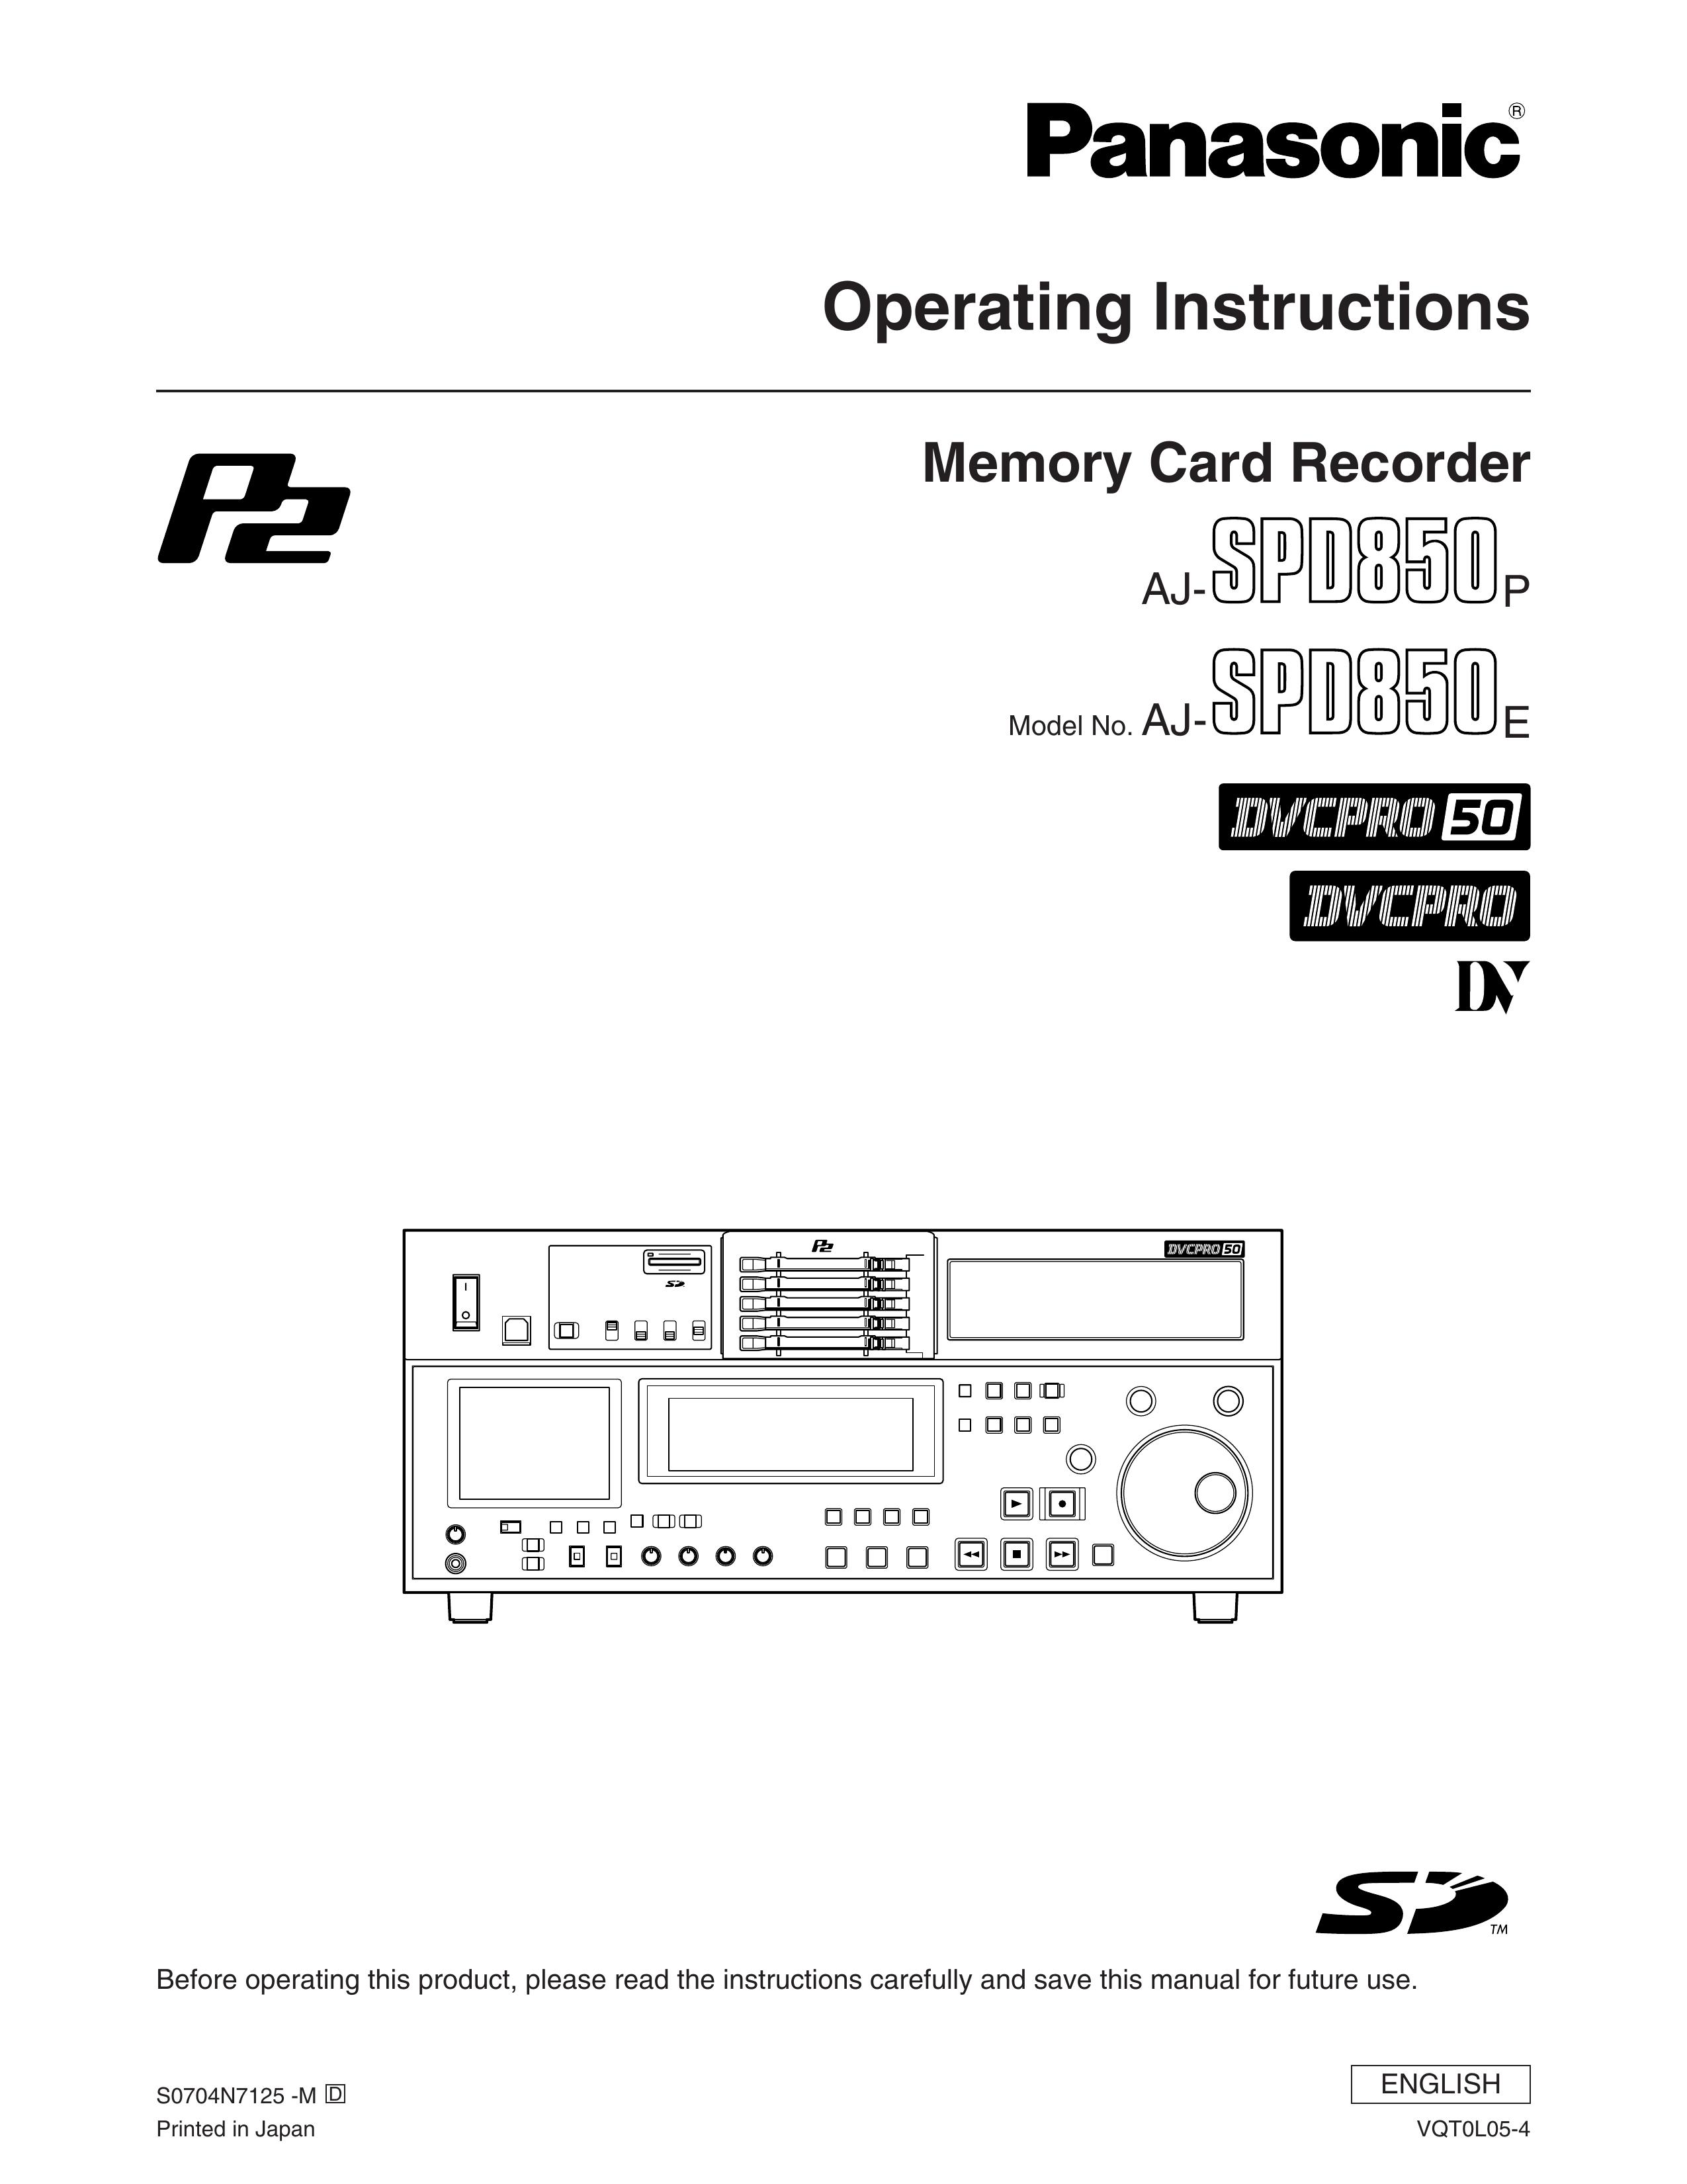 Panasonic AJ-Spd850p Camera Accessories User Manual